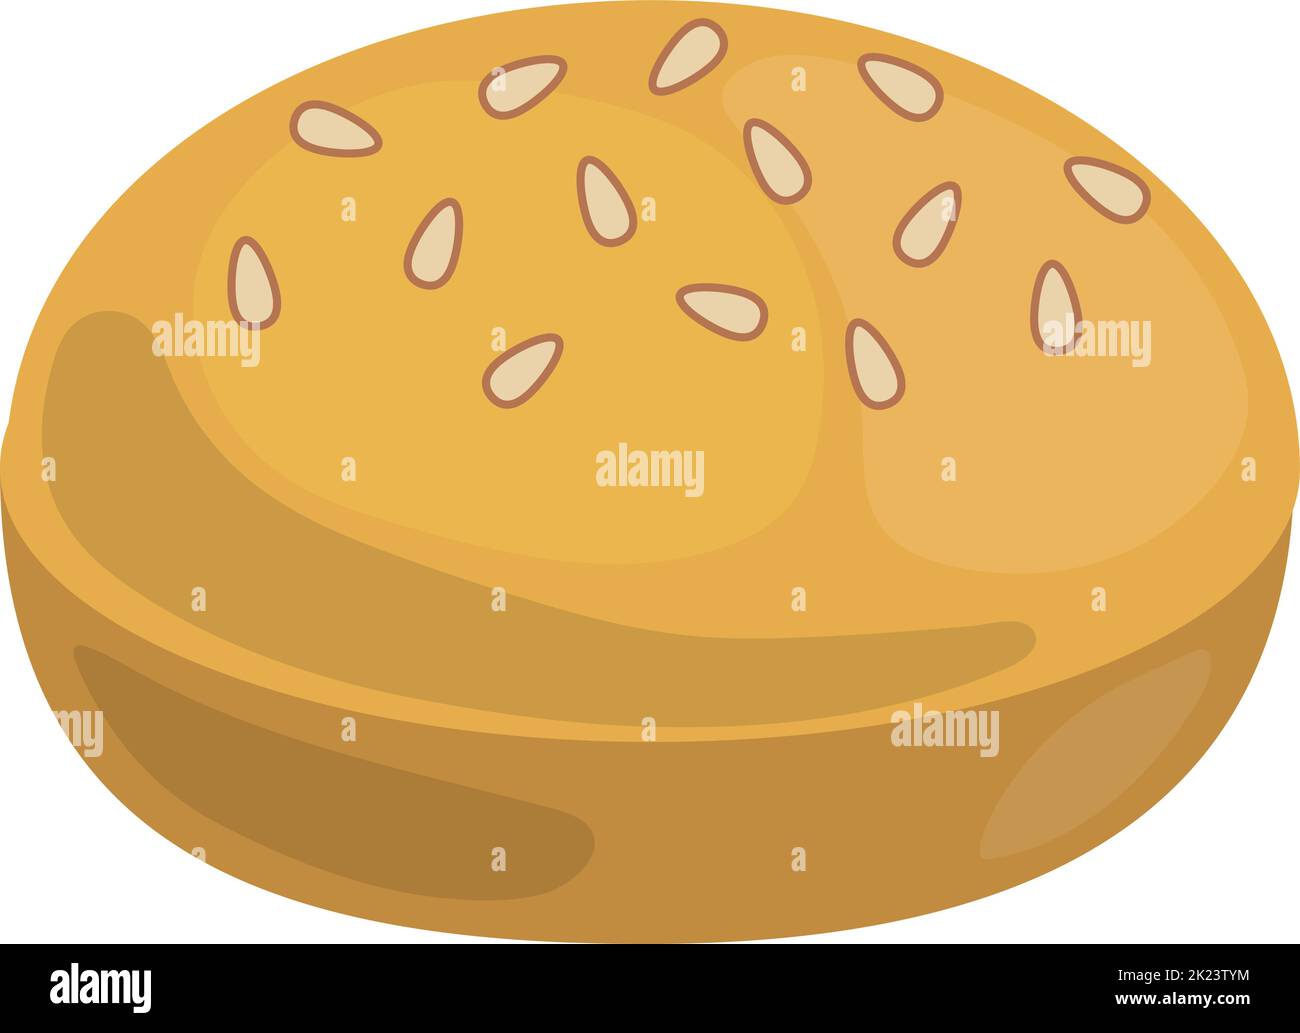 Bun with sesame seeds. Cartoon burger bakery icon Stock Vector